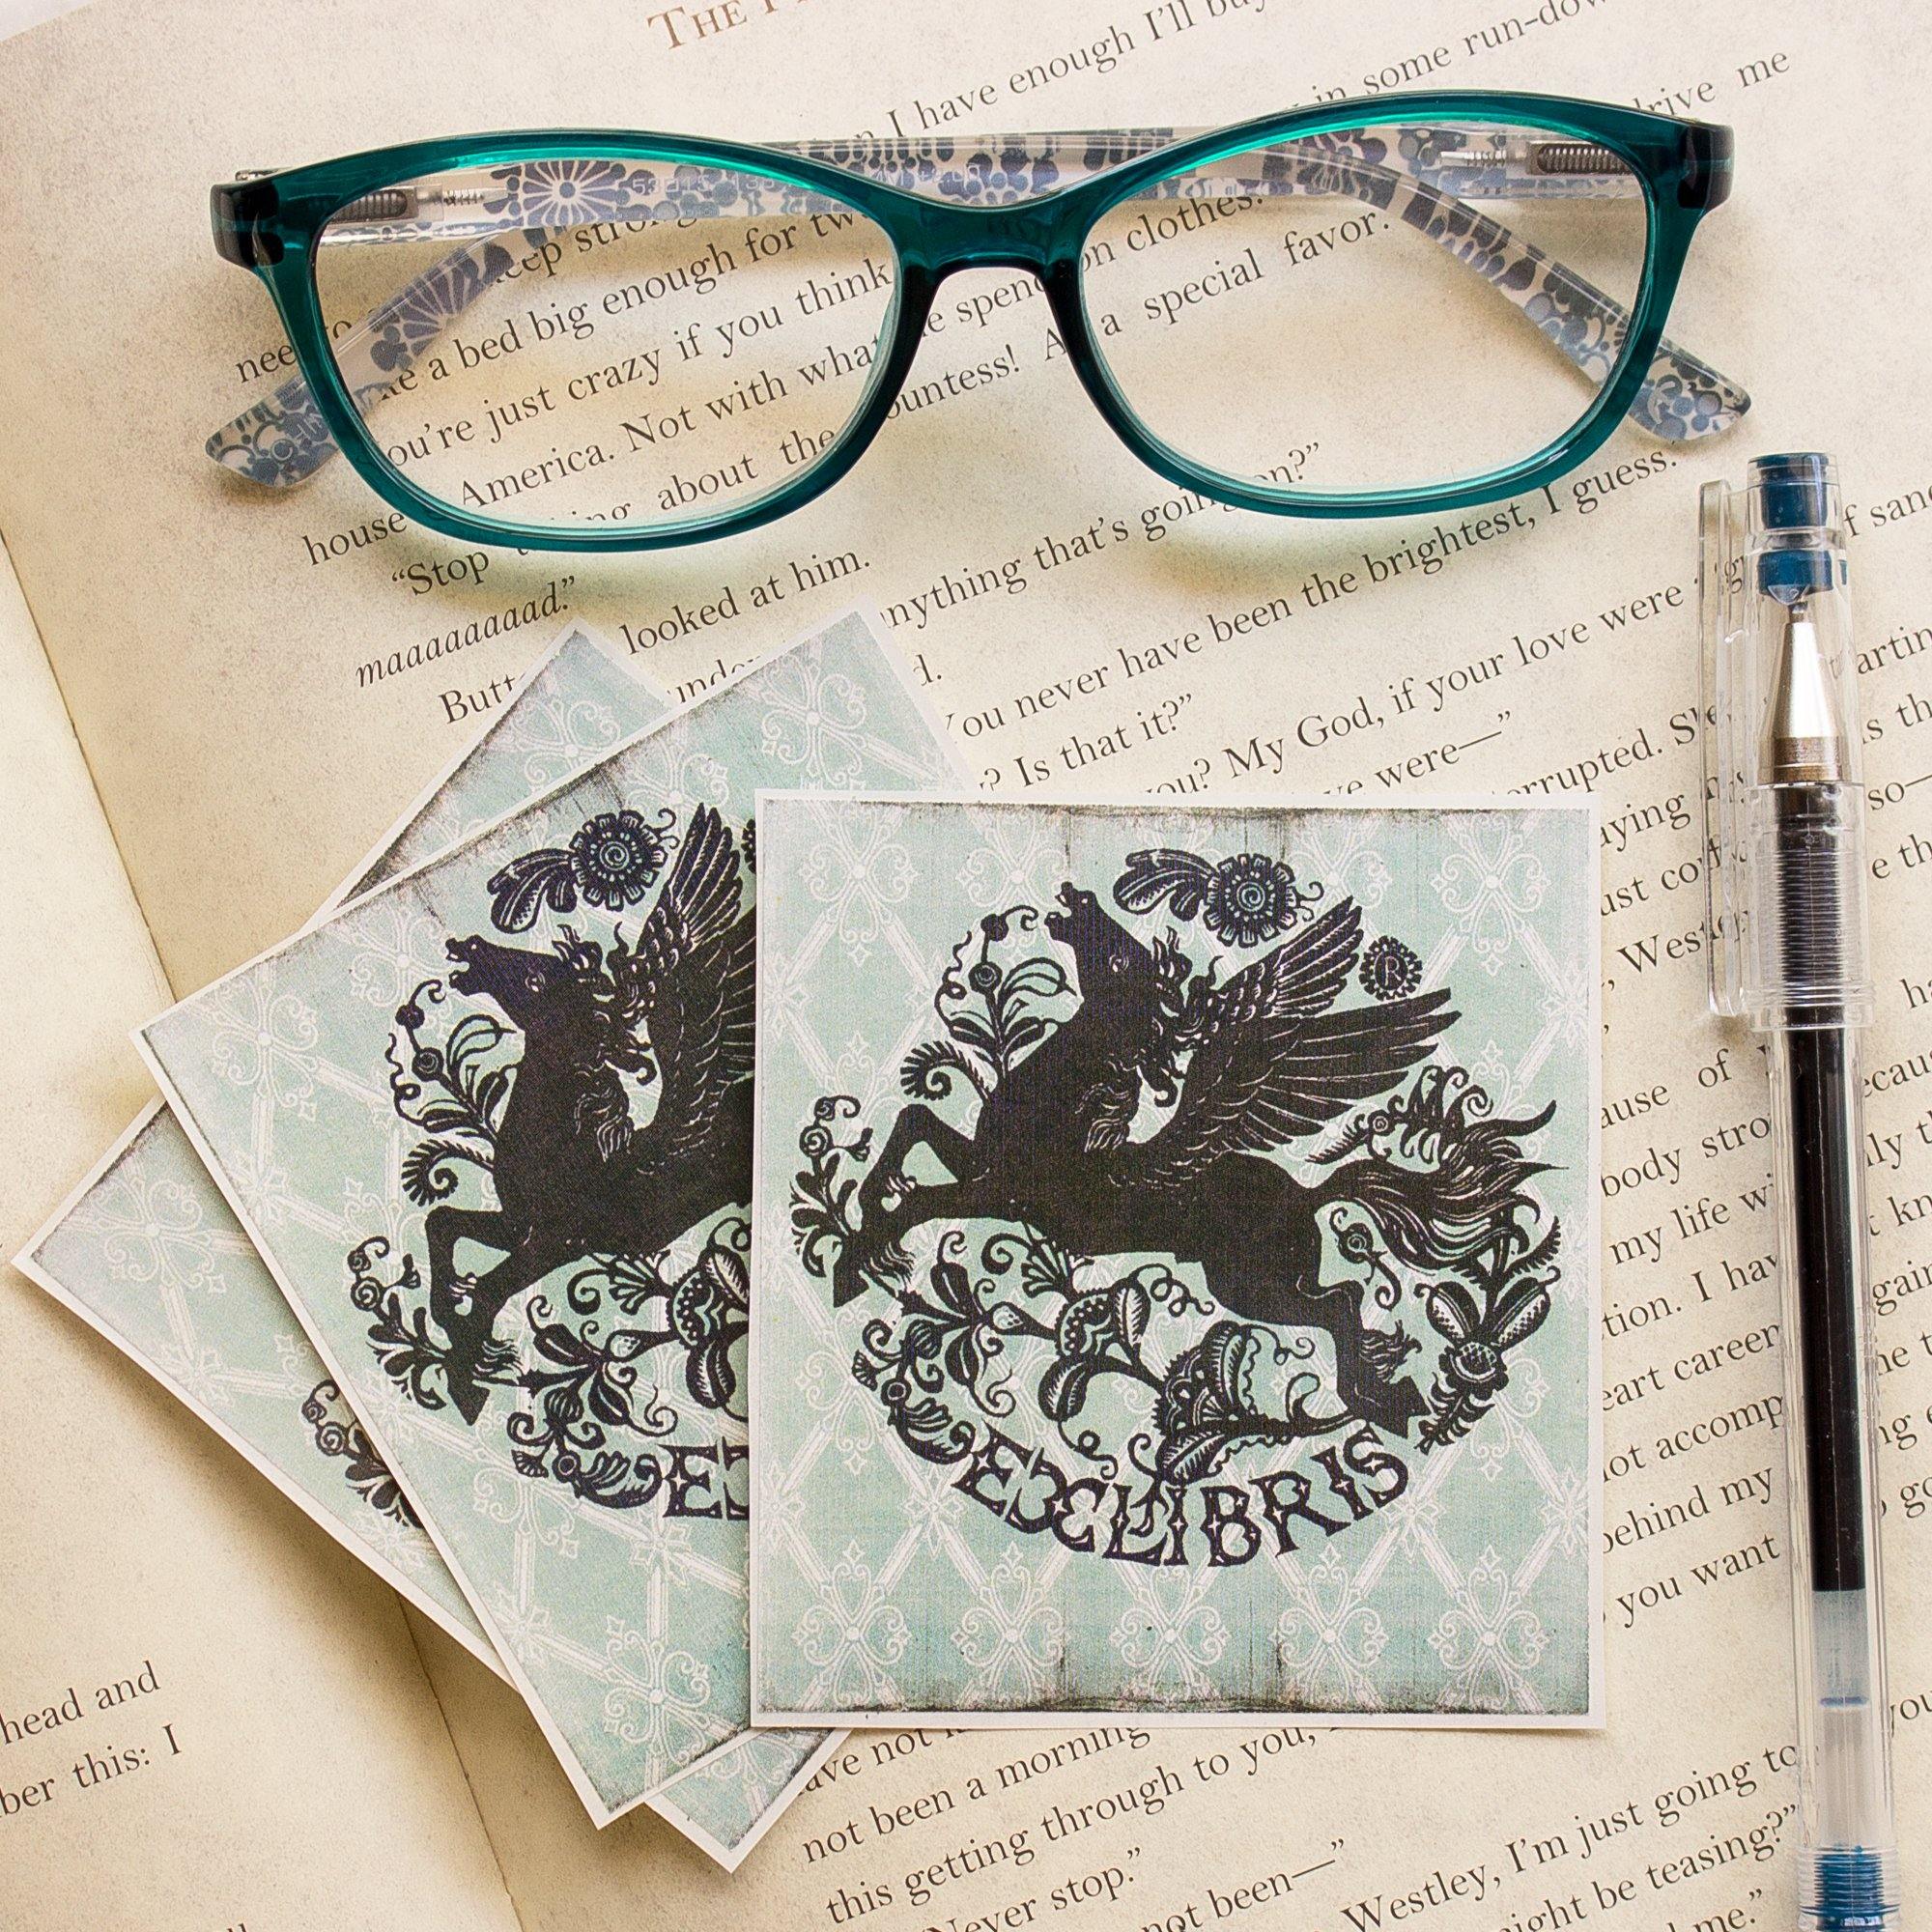 Reading Journal Stickers - Tiny Bookshop #3 – Paper Monogatari